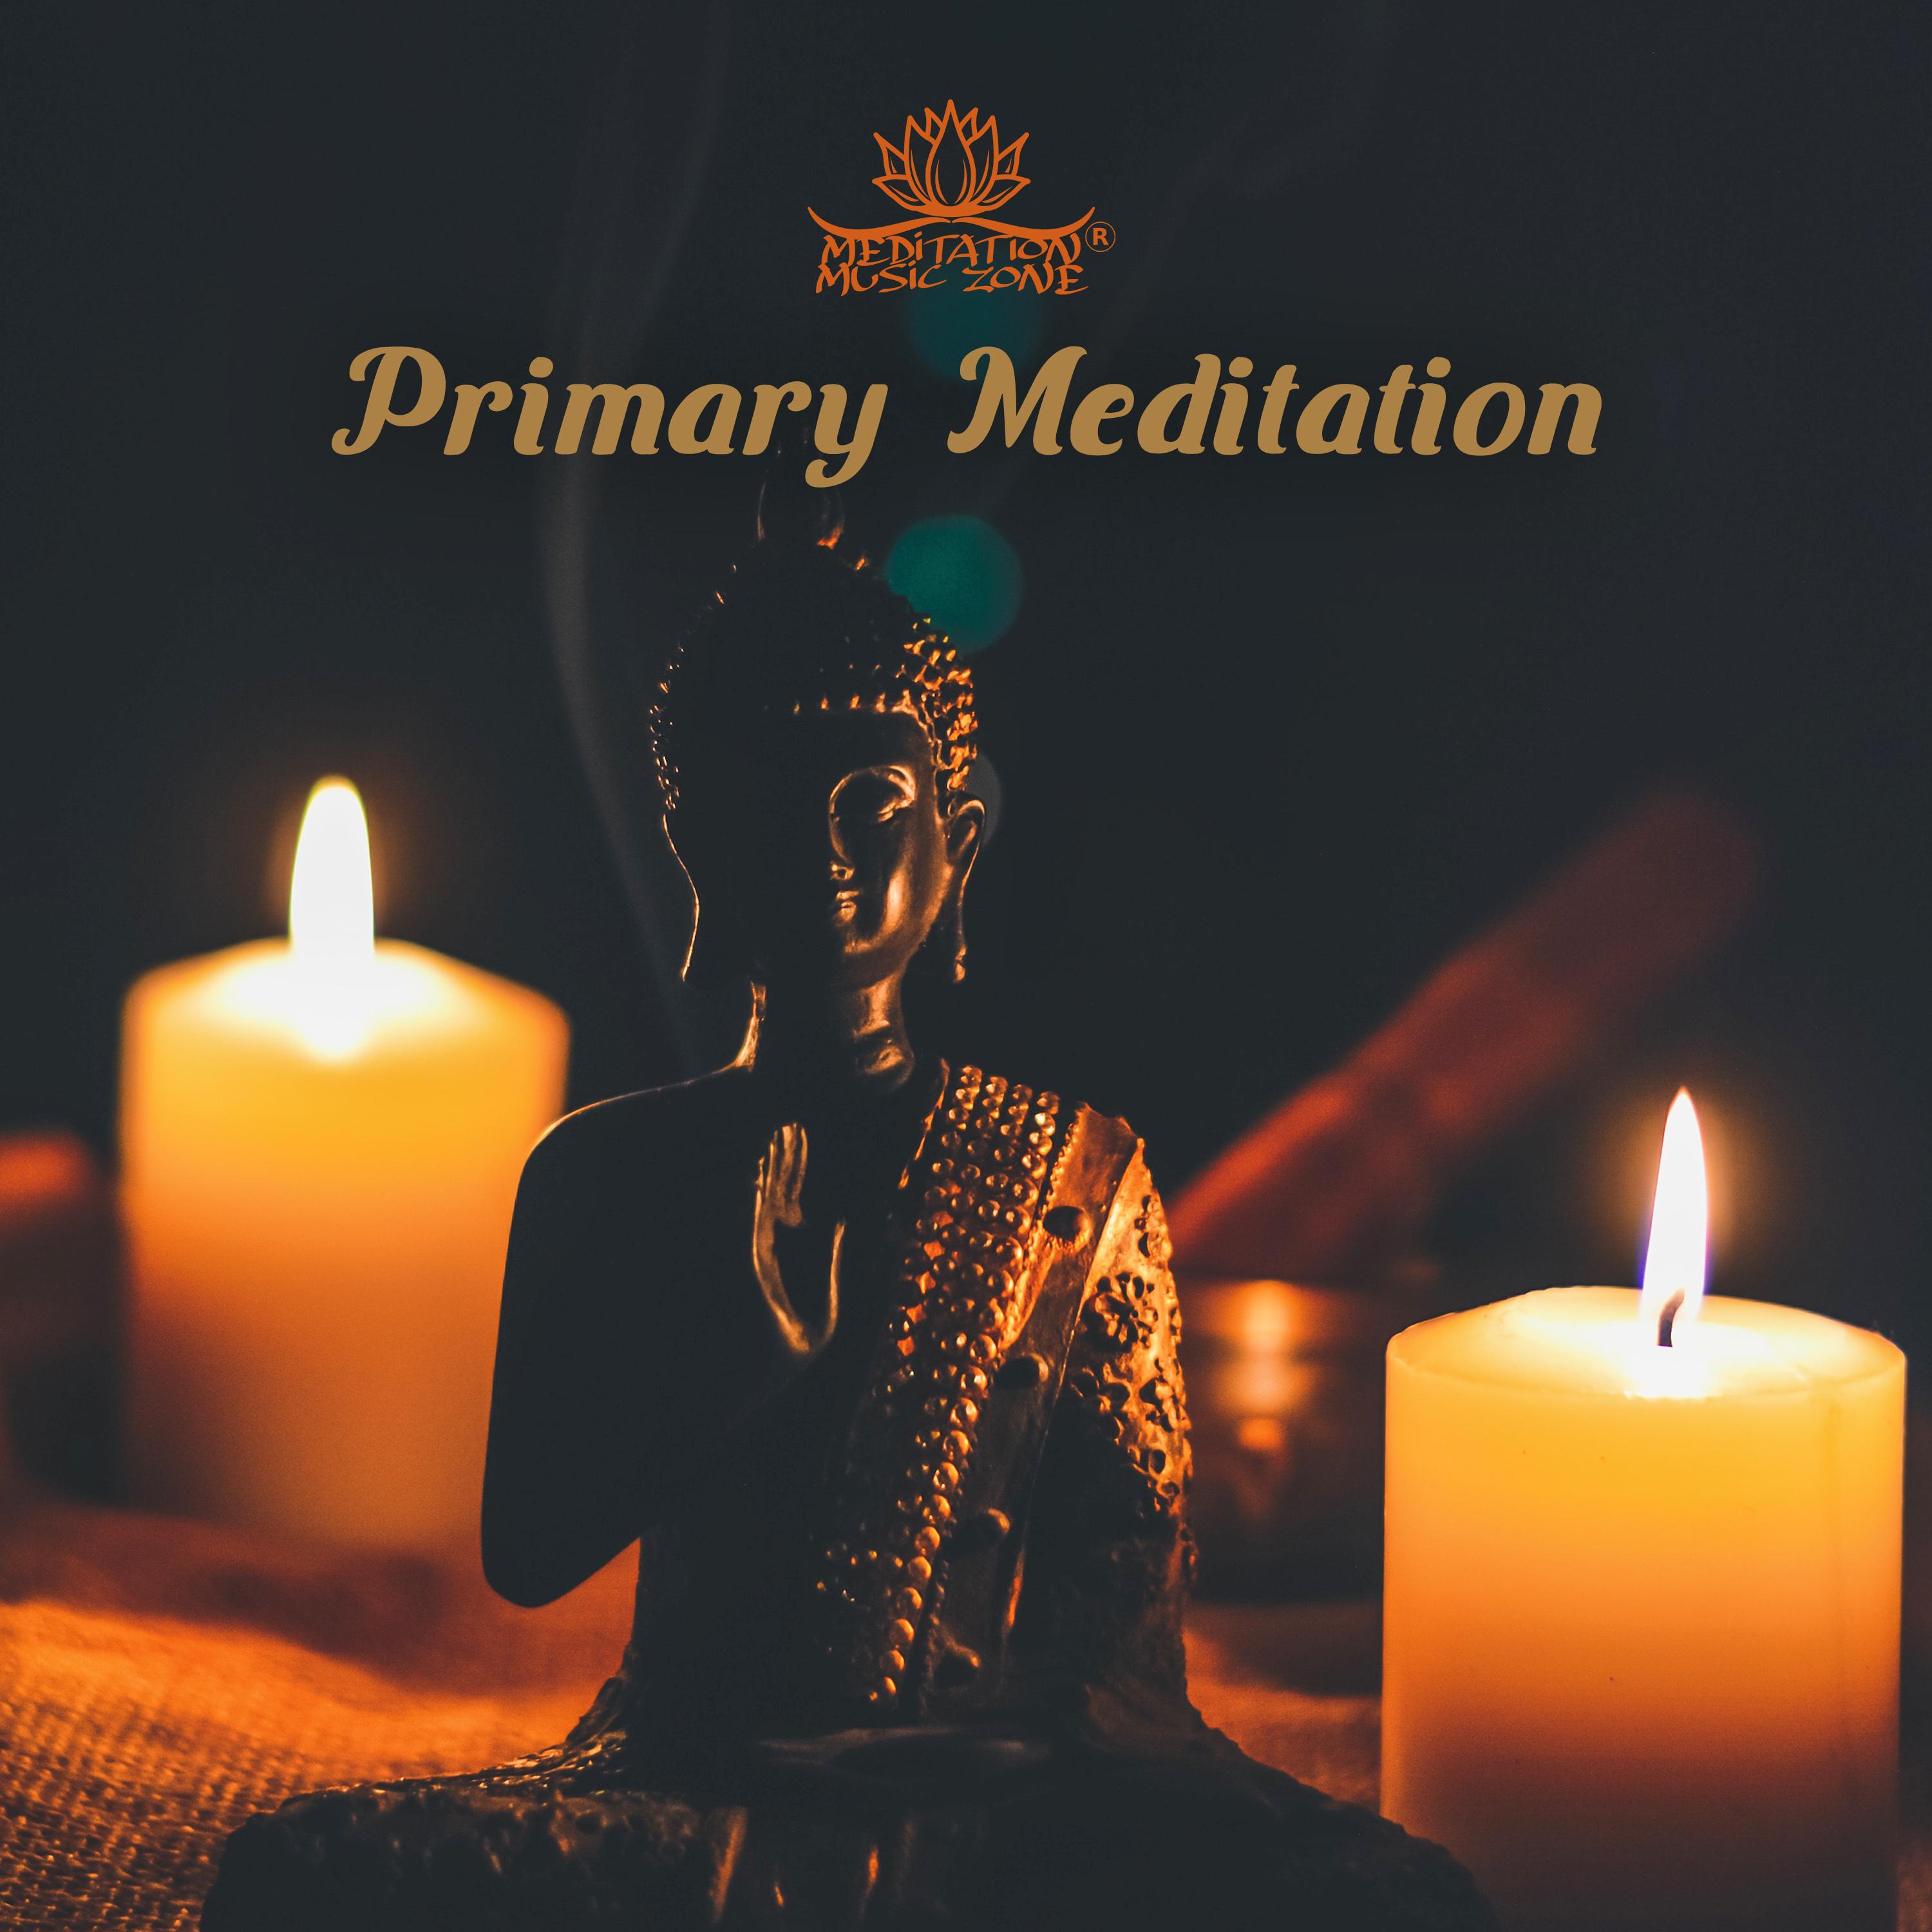 Primary Meditation (Concentration, Union, Calm)